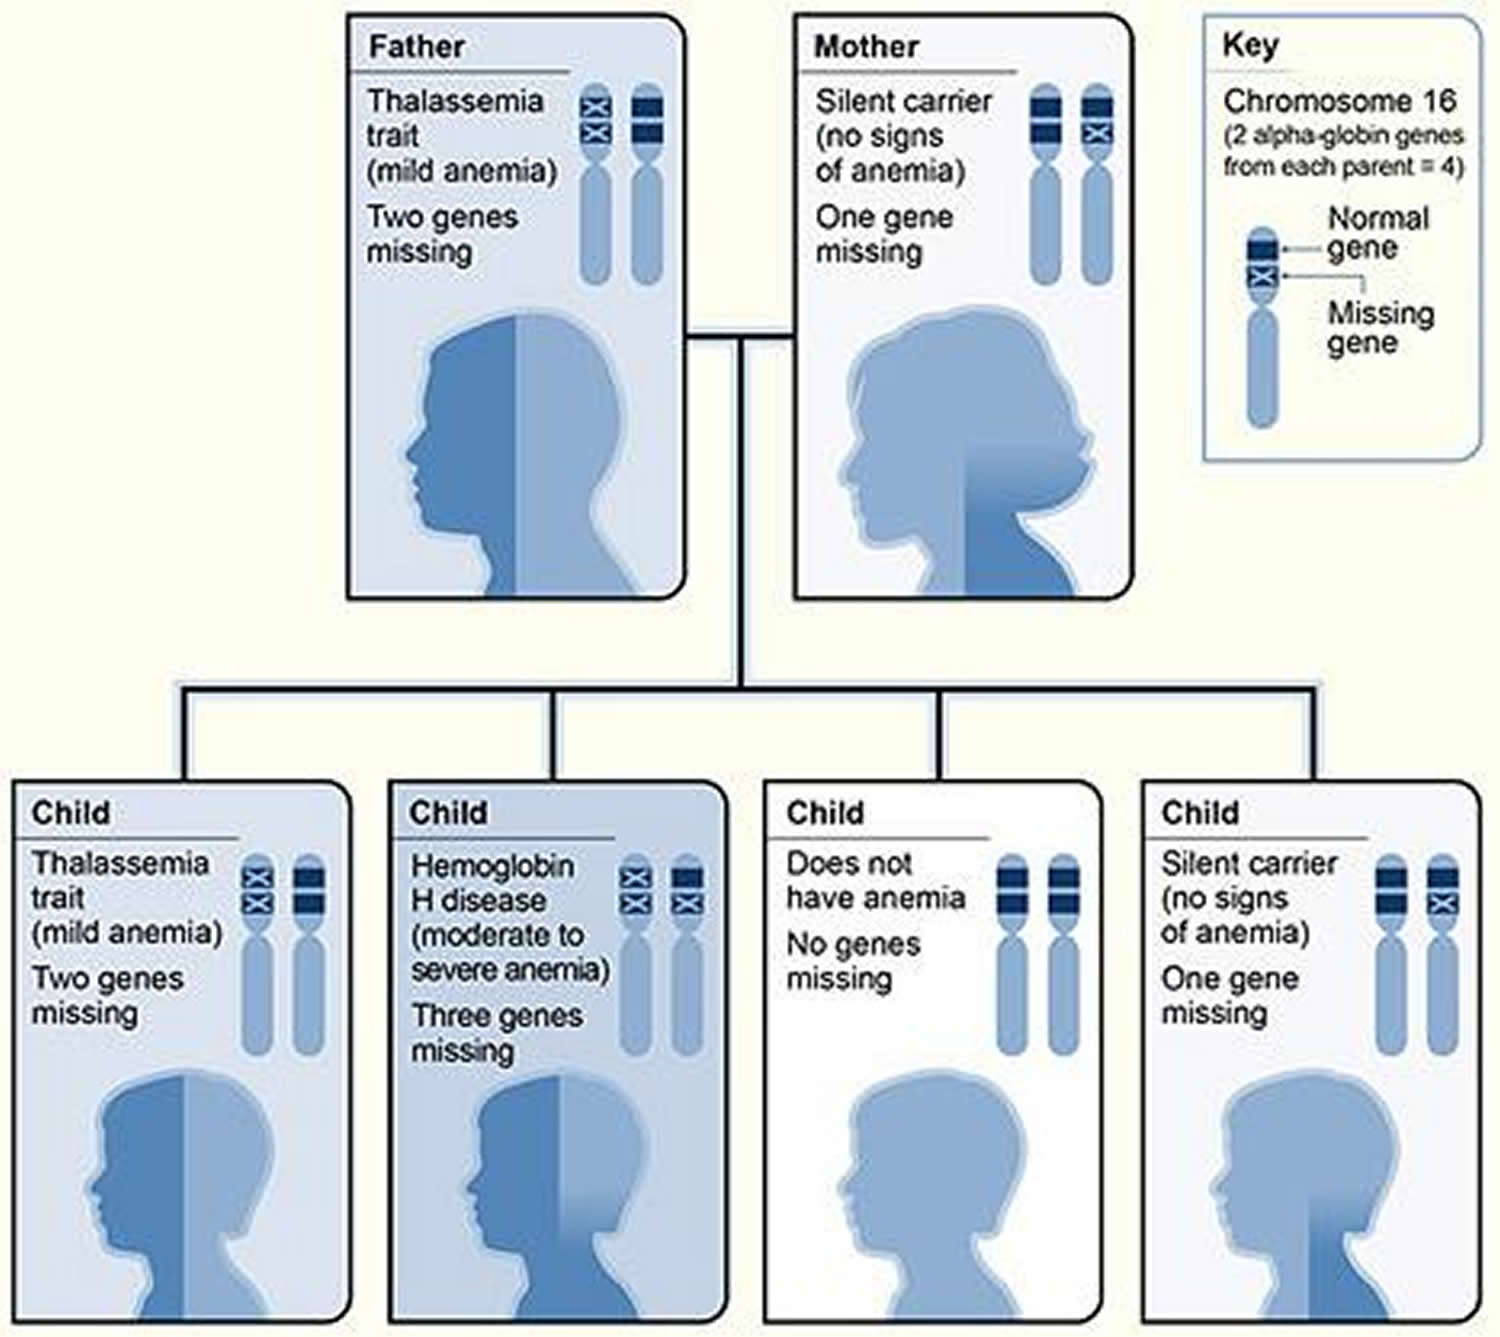 Alpha Thalassemia inheritance pattern